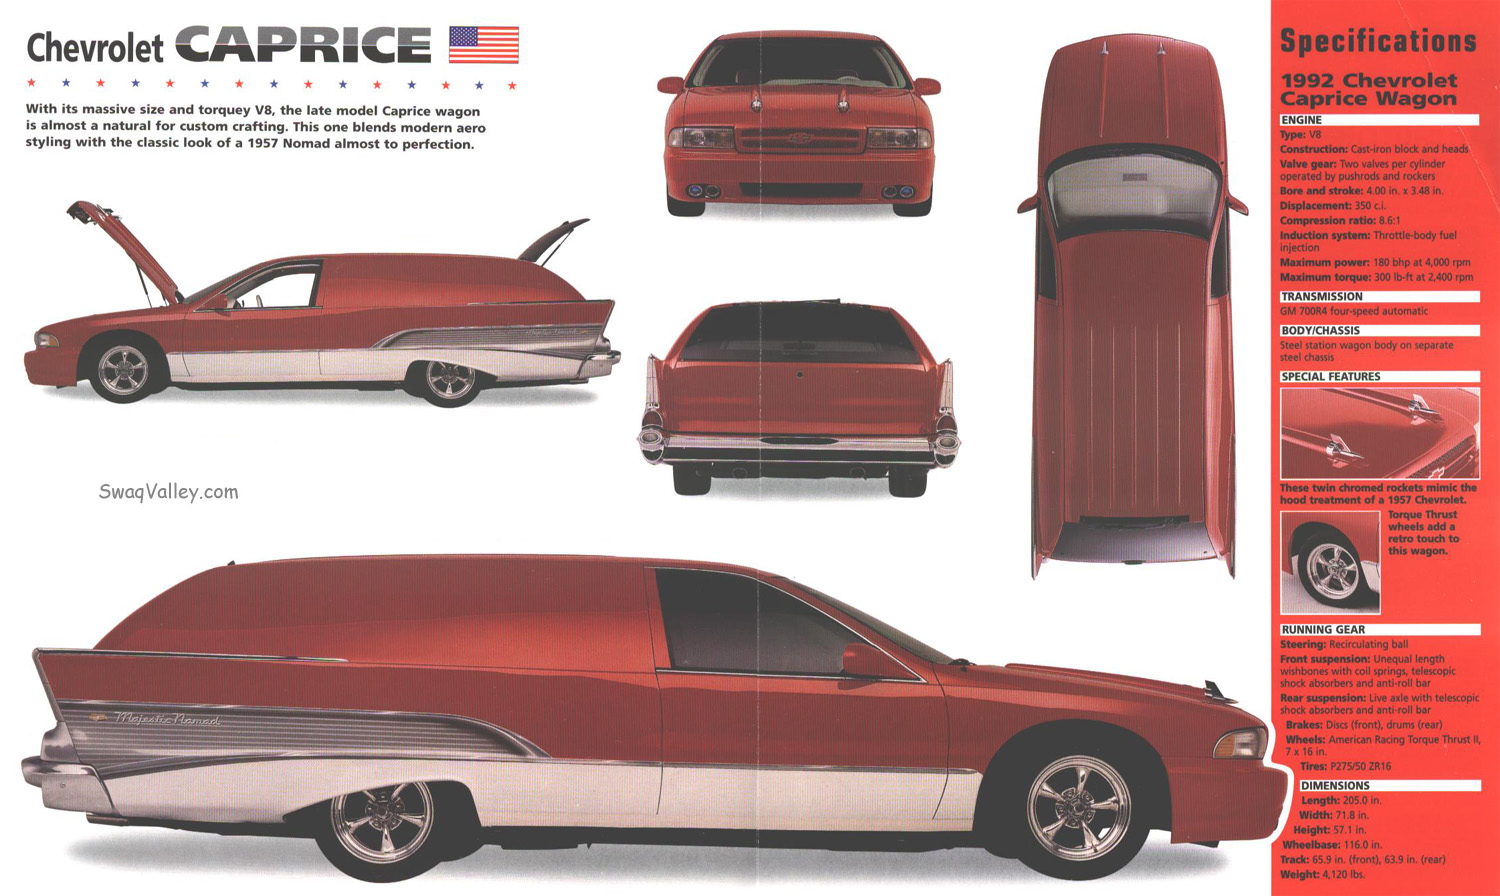 Chevrolet Caprice wagon